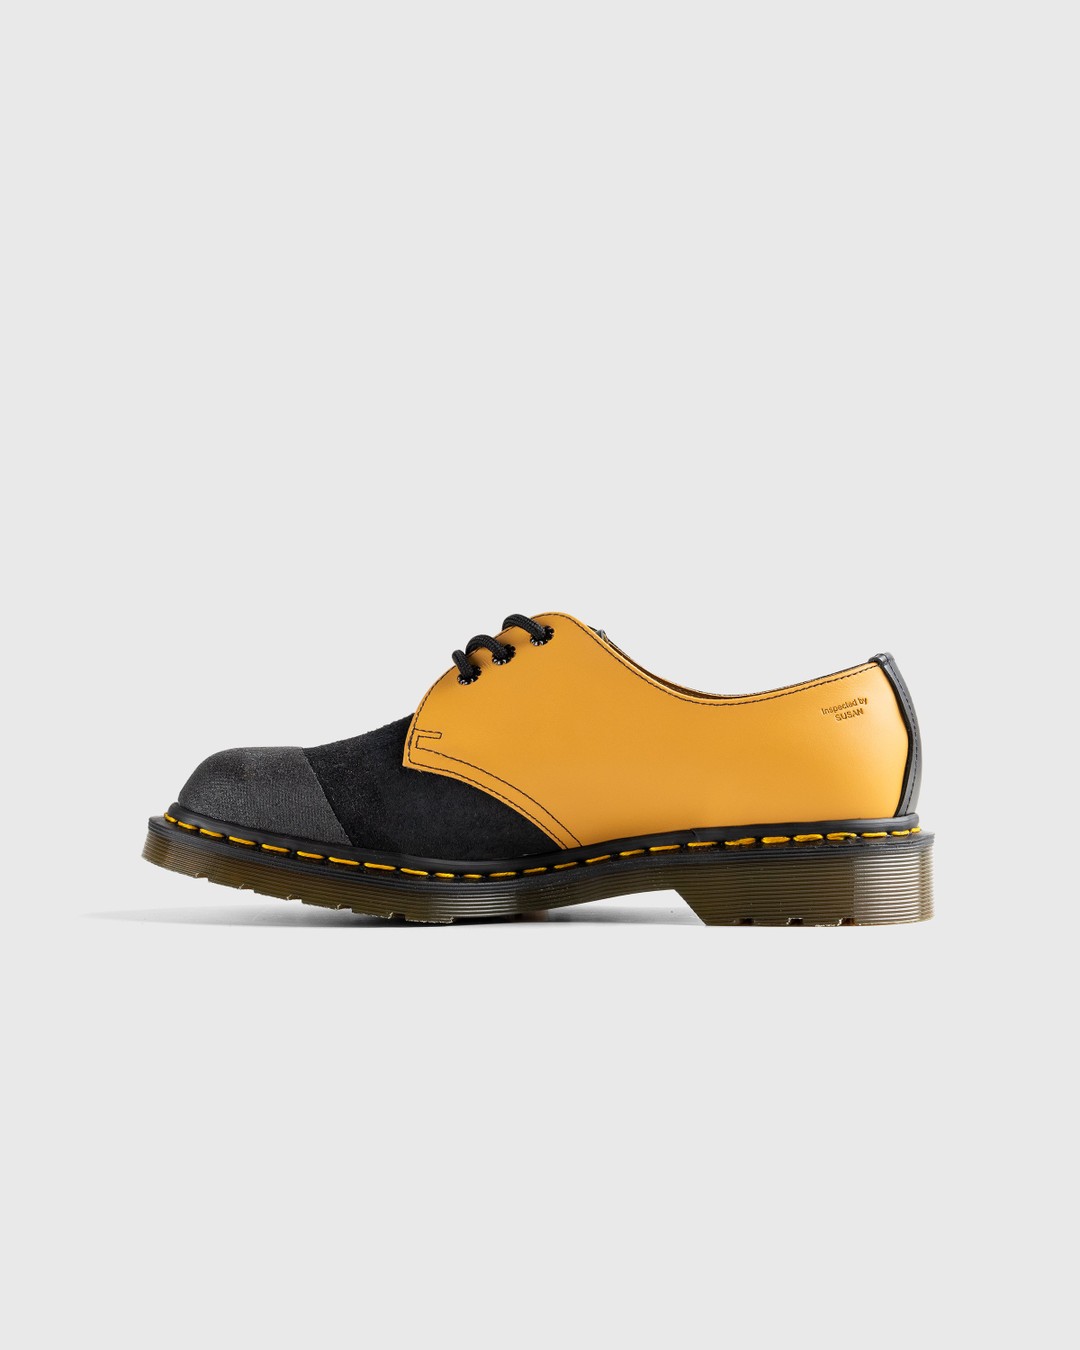 Dr. Martens – 1461 Reverse Black+Tan Smooth+Nappa - Shoes - Black - Image 2